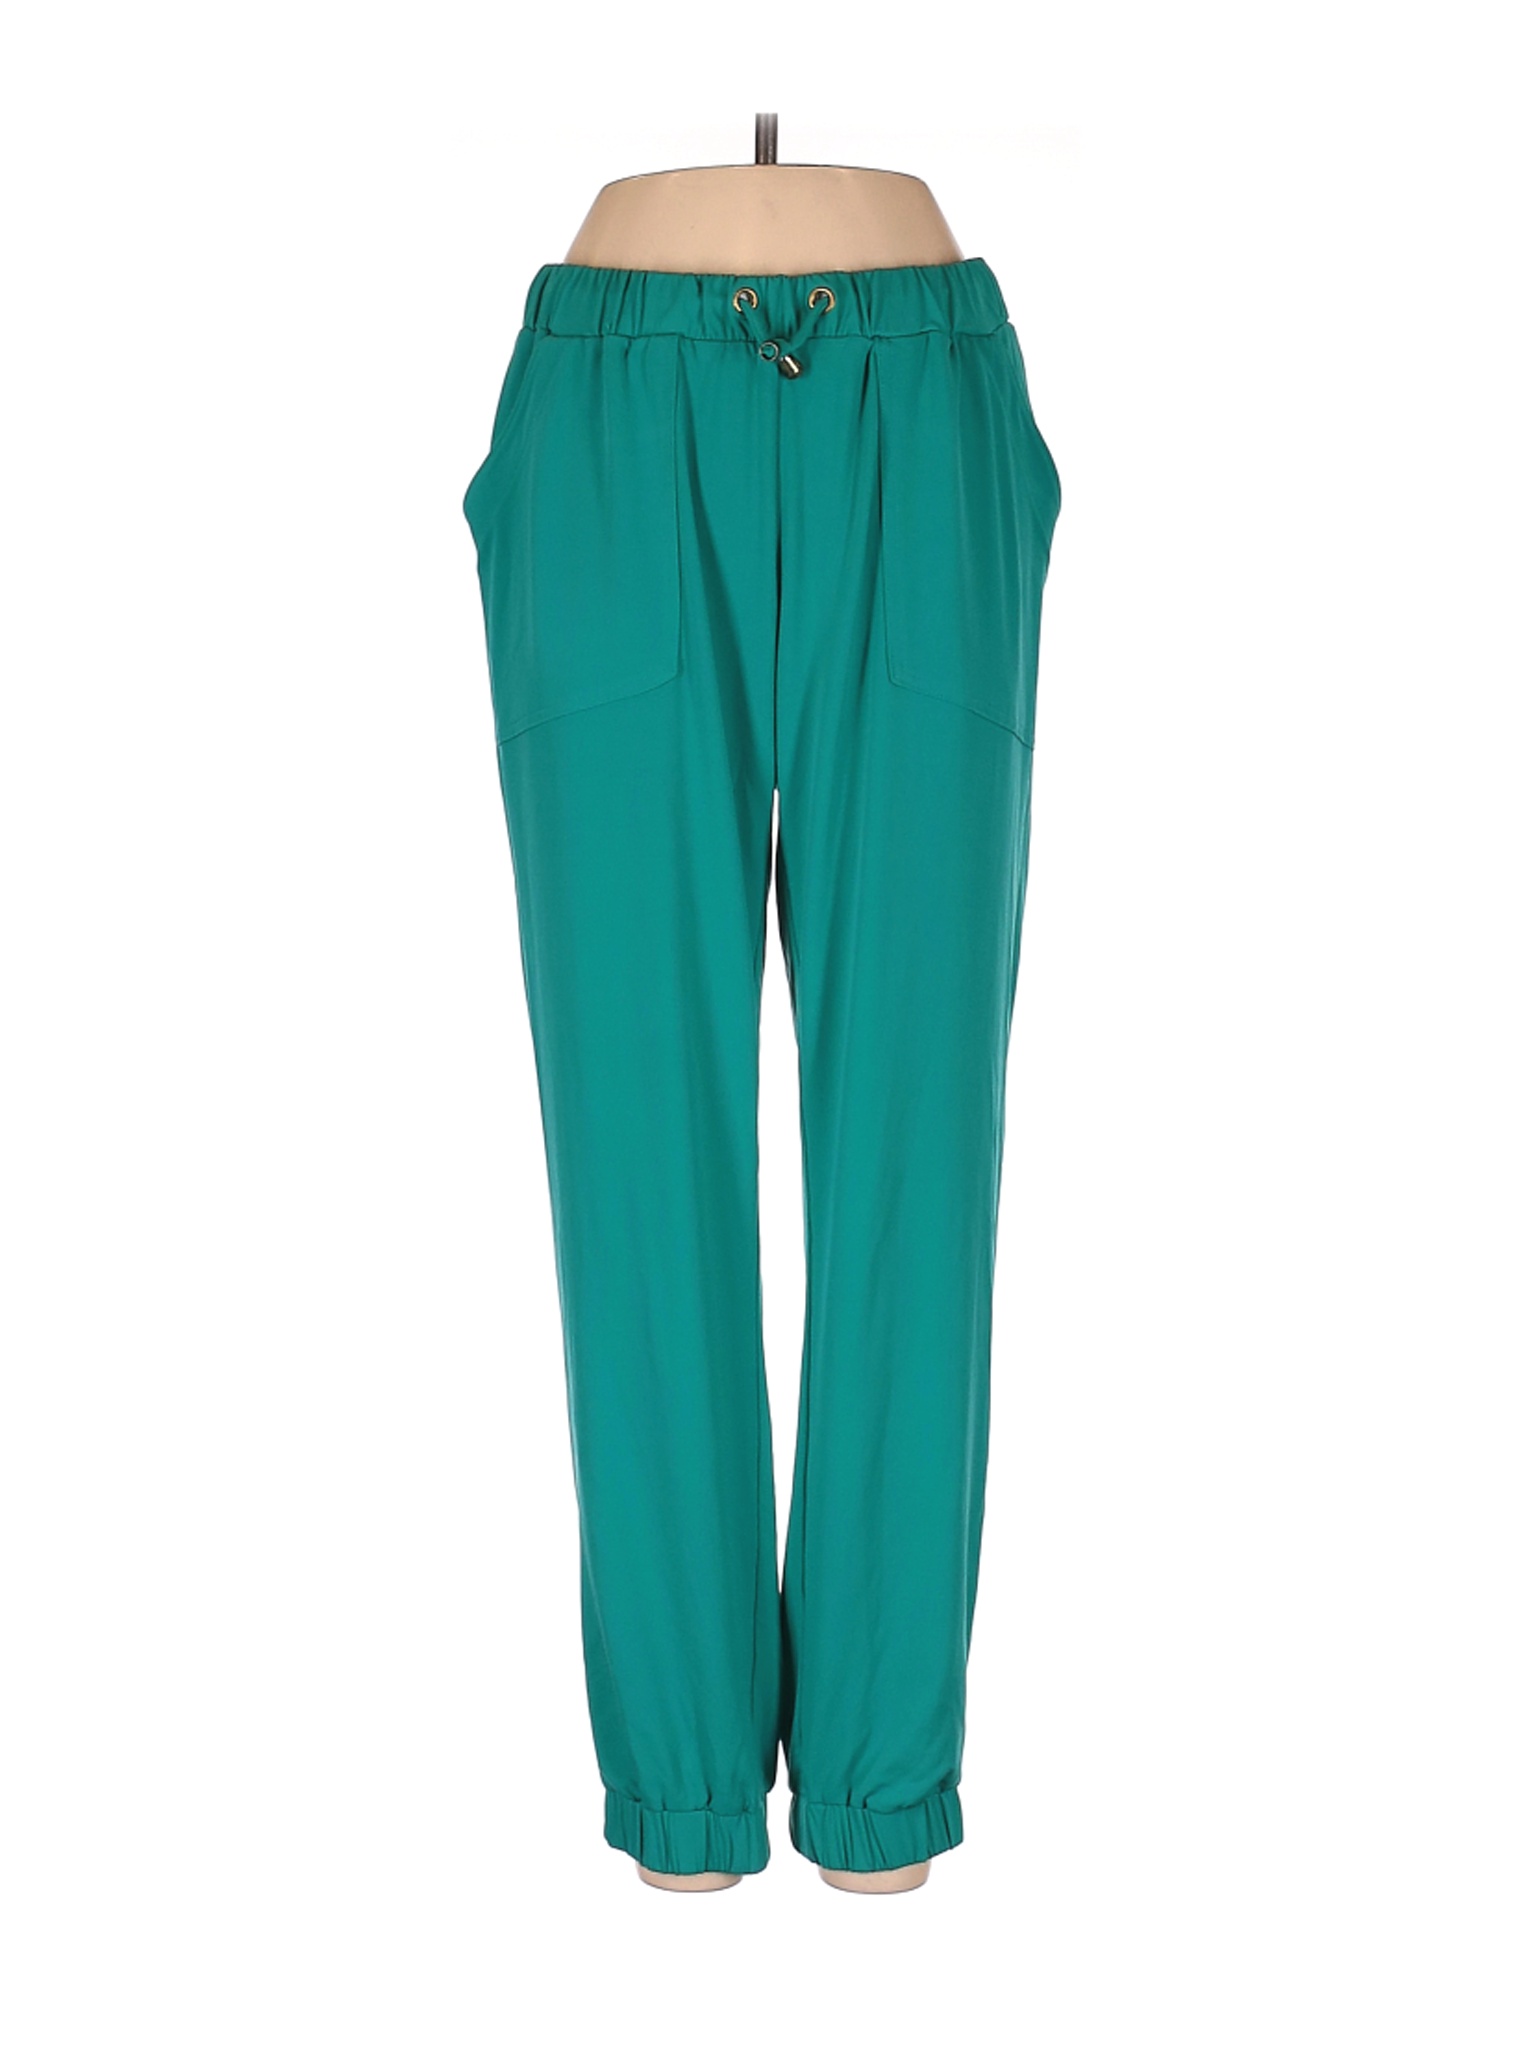 New York & Company Women Green Casual Pants S | eBay